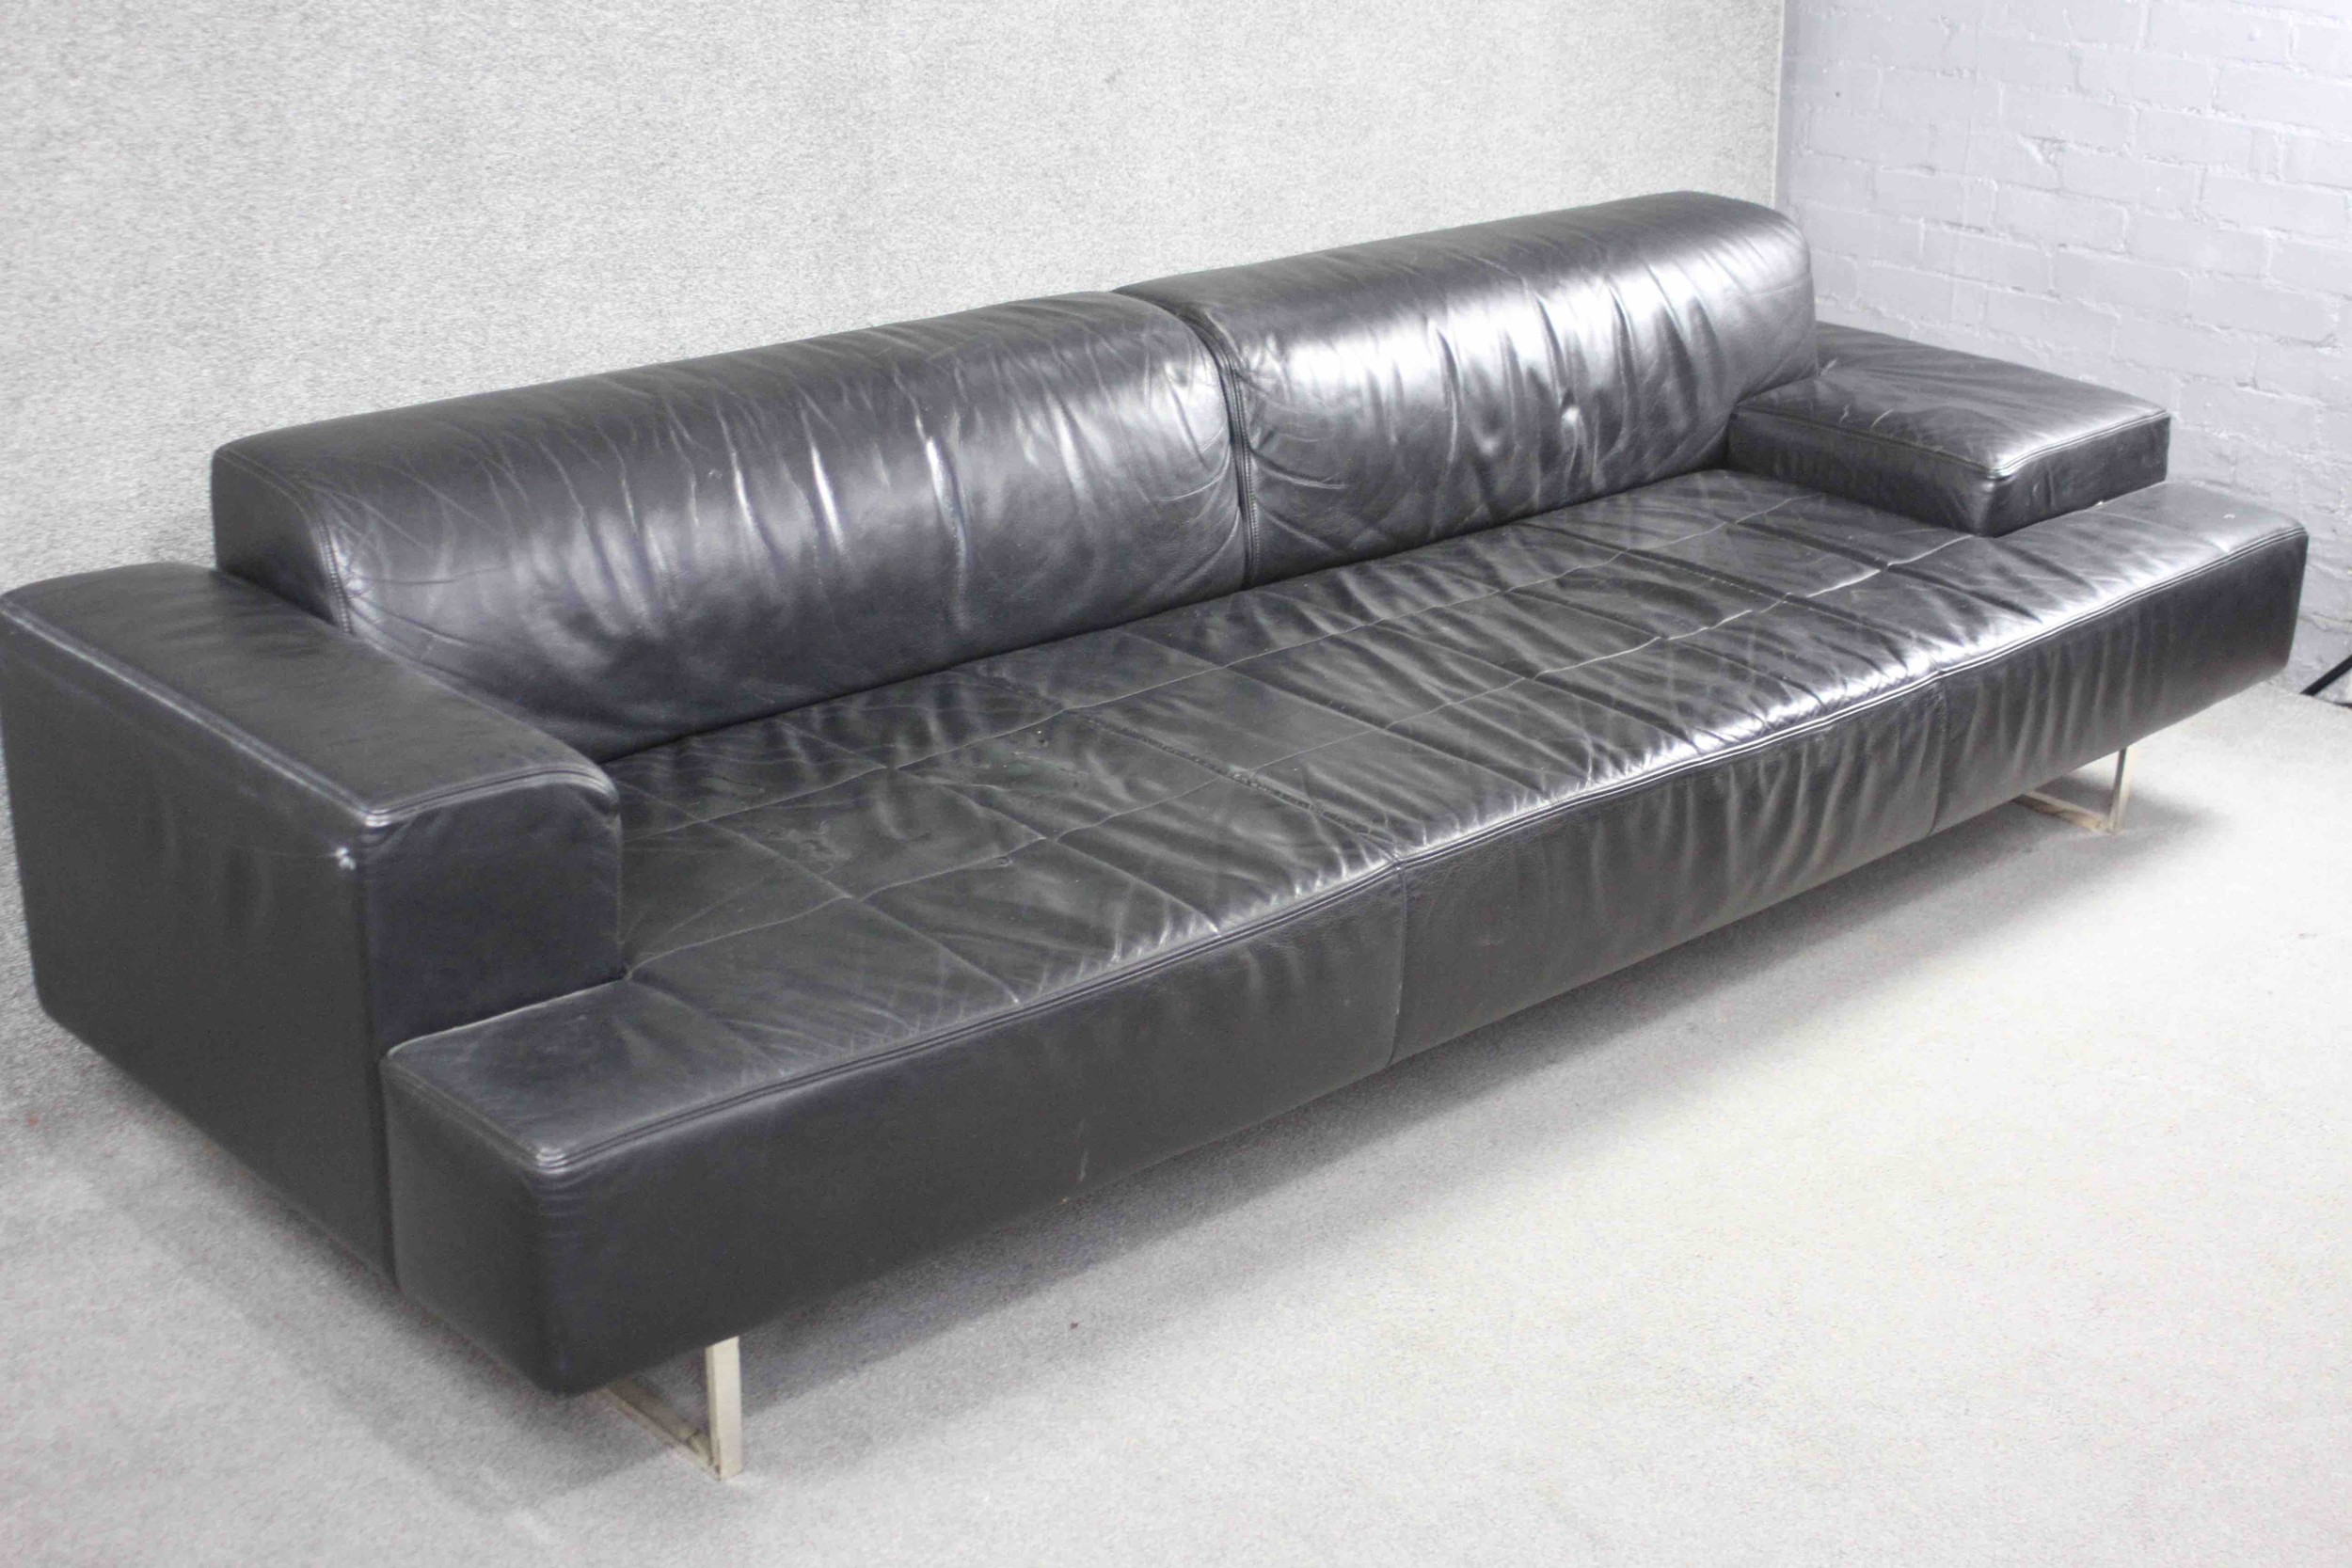 Poltrona Frau, Italy, Quadra sofa in hand stitched black leather. H.70 W.265 D.87 - Image 2 of 4